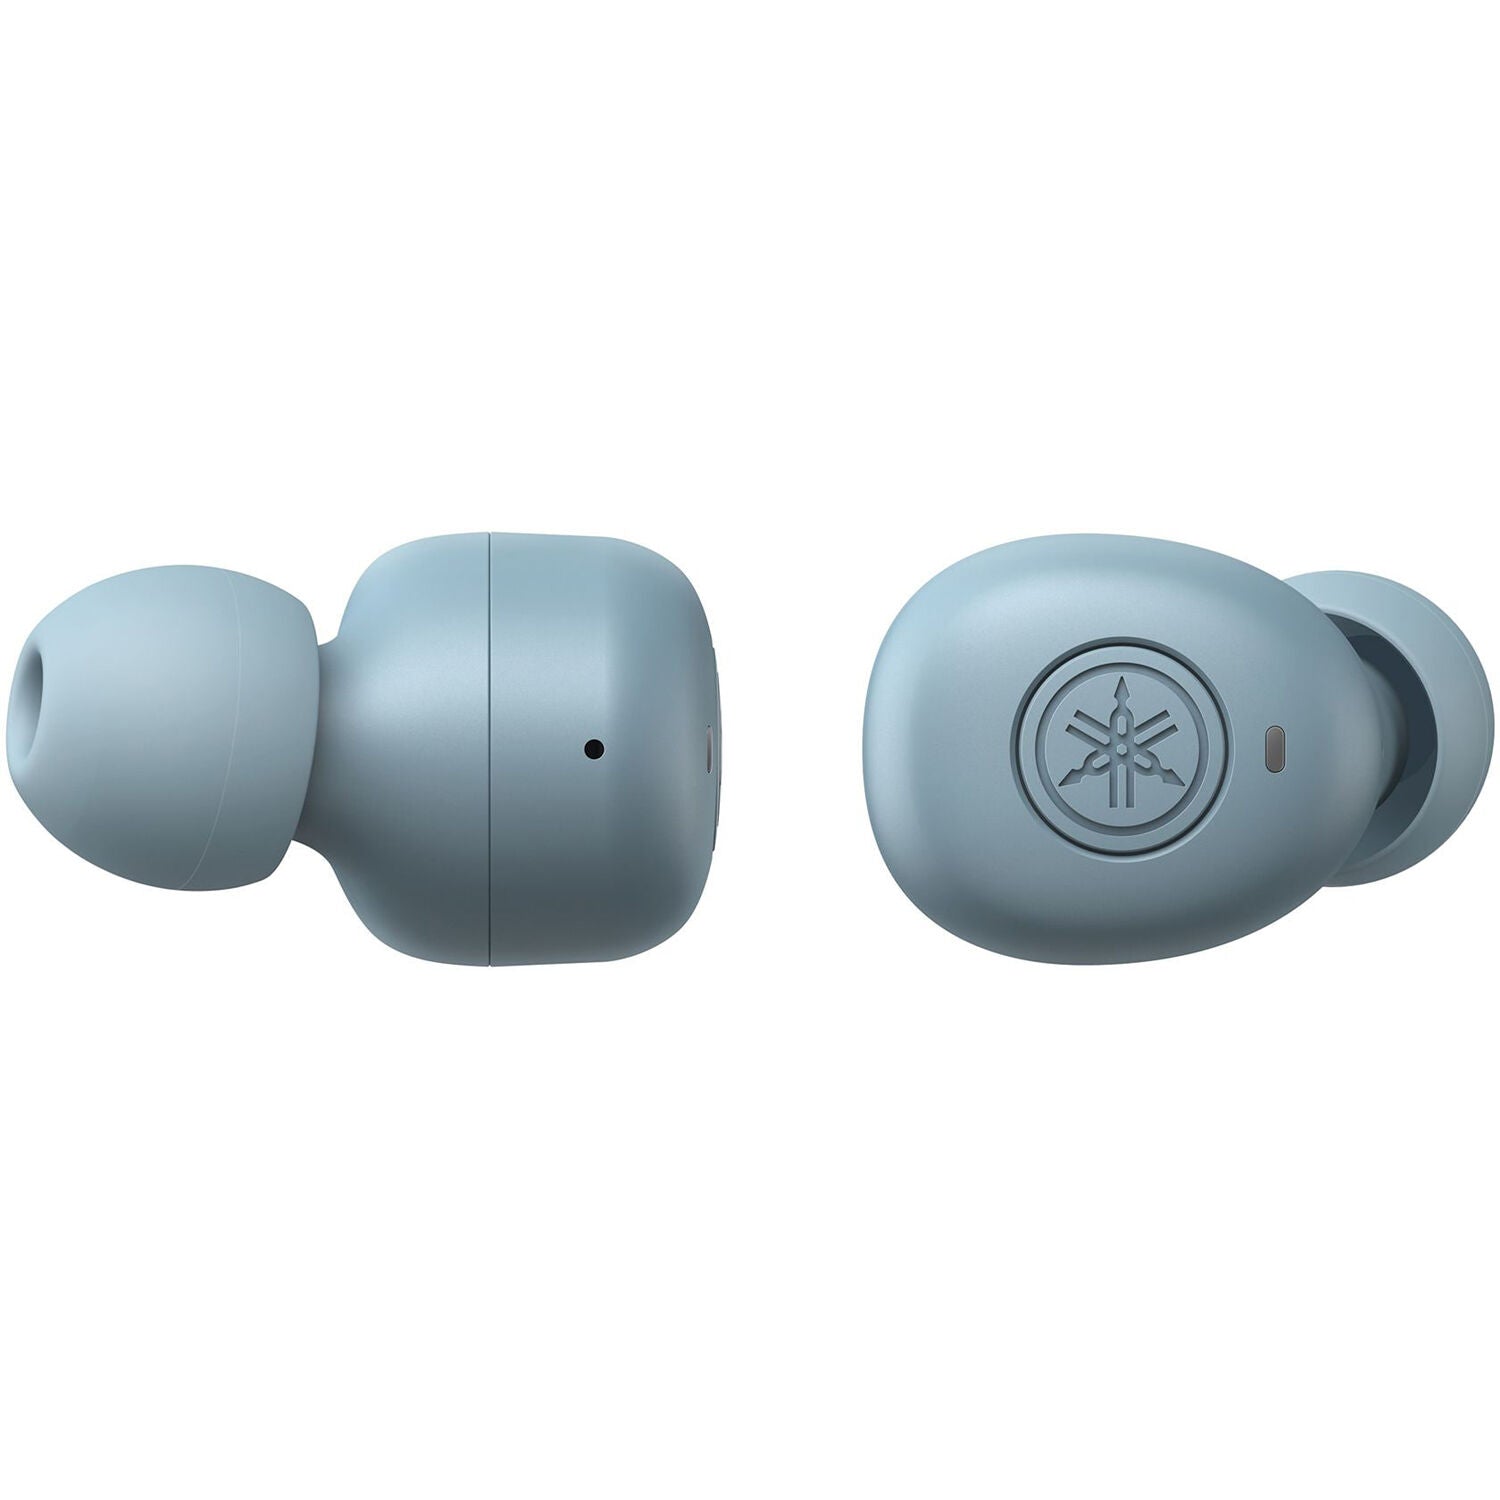 Yamaha TW-E3B Premium Sound True Wireless Earbuds Headphones